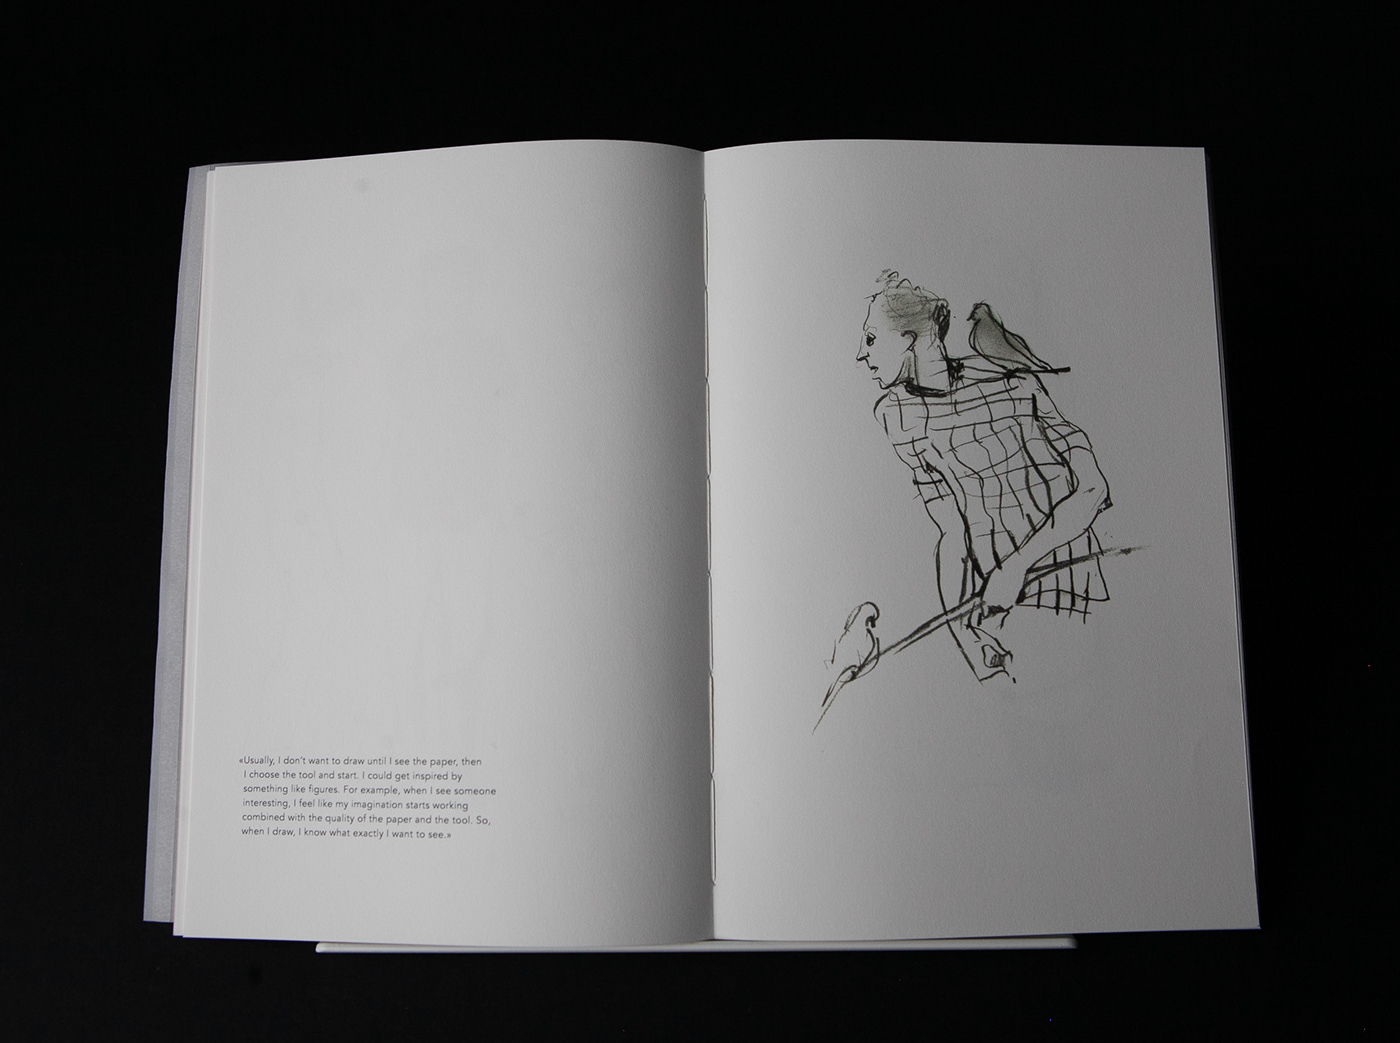 art direction  Exhibition book editorial exhibition catalogue book design Drawing  sketchbook graphic design 